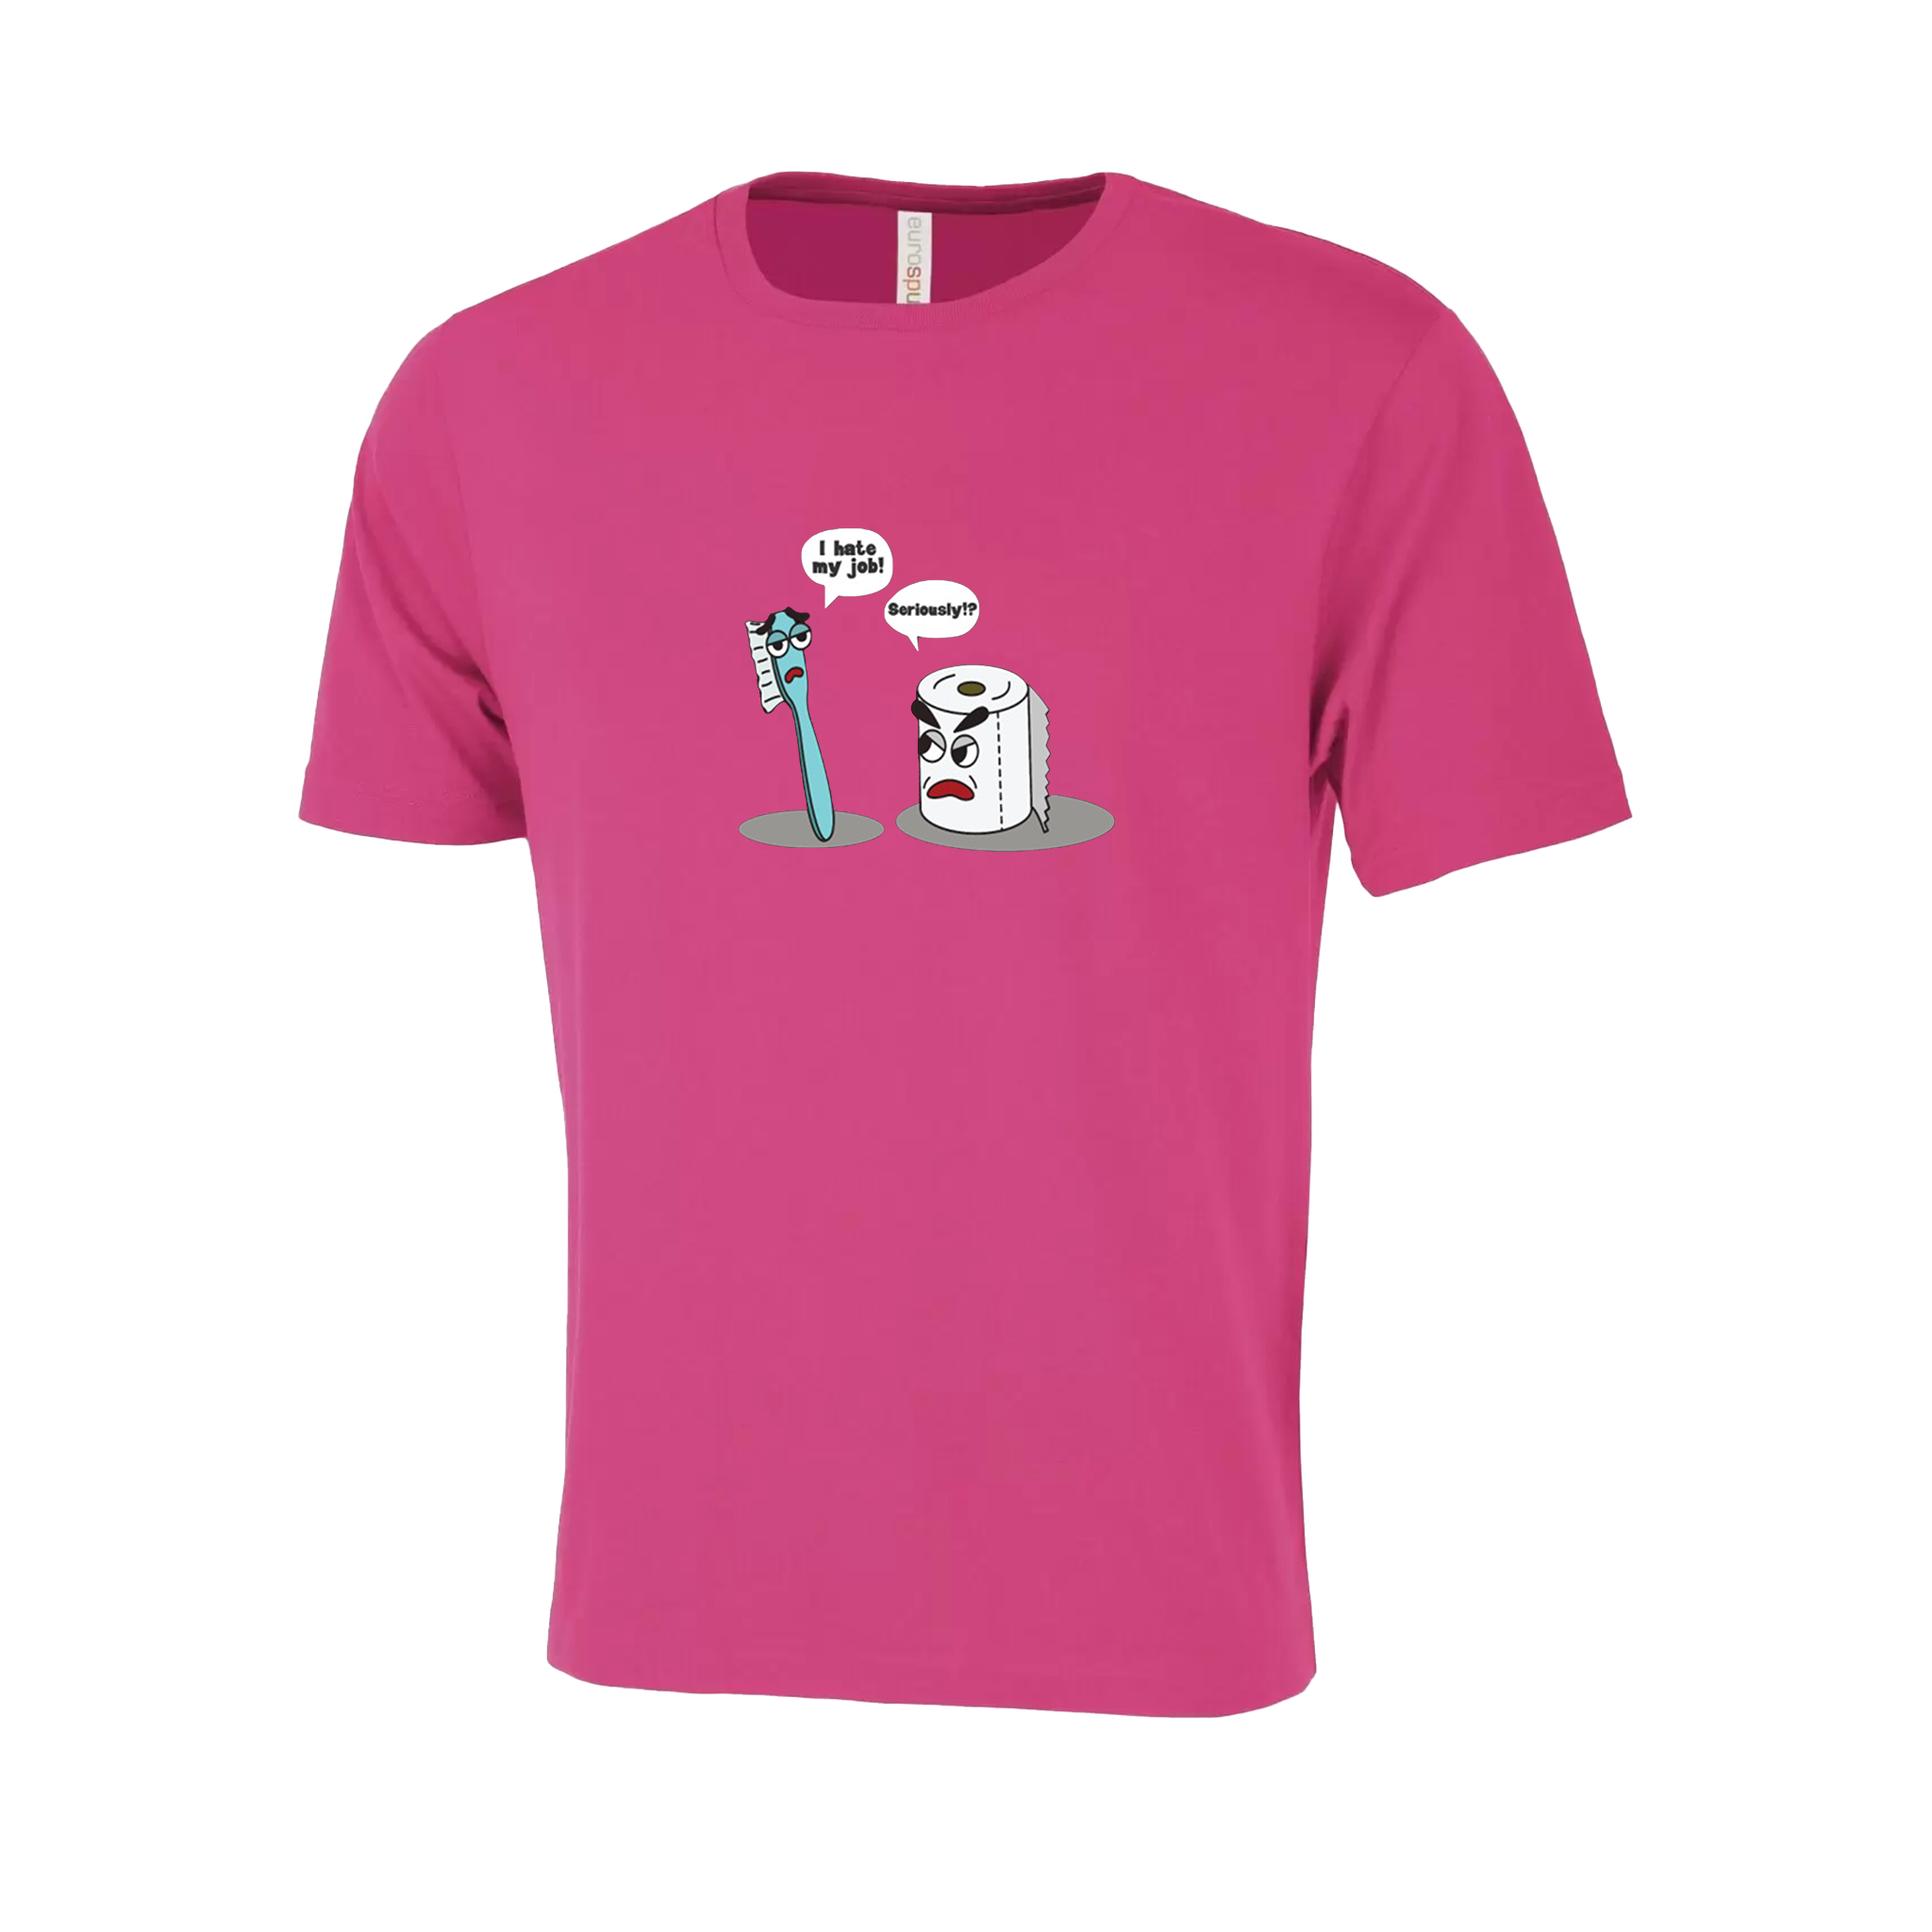 Toilet Humor Novelty T-Shirt - Adult Unisex Sizing XS-4XL - Pink